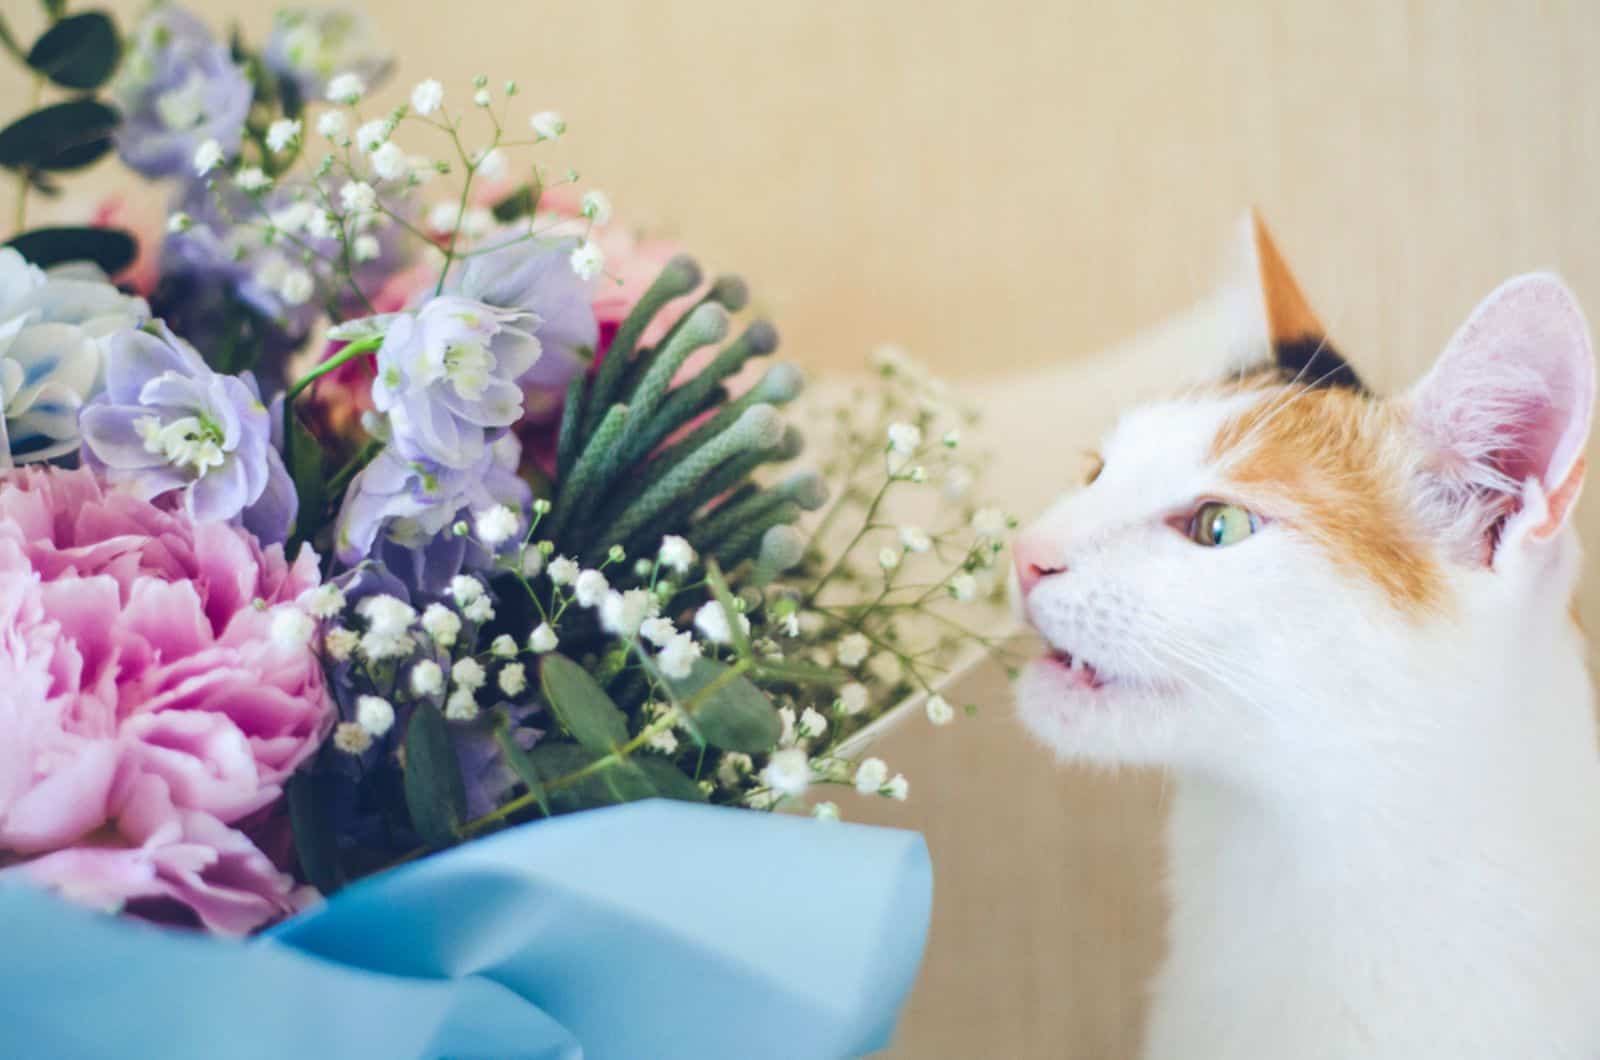  domestic cat bites flowers